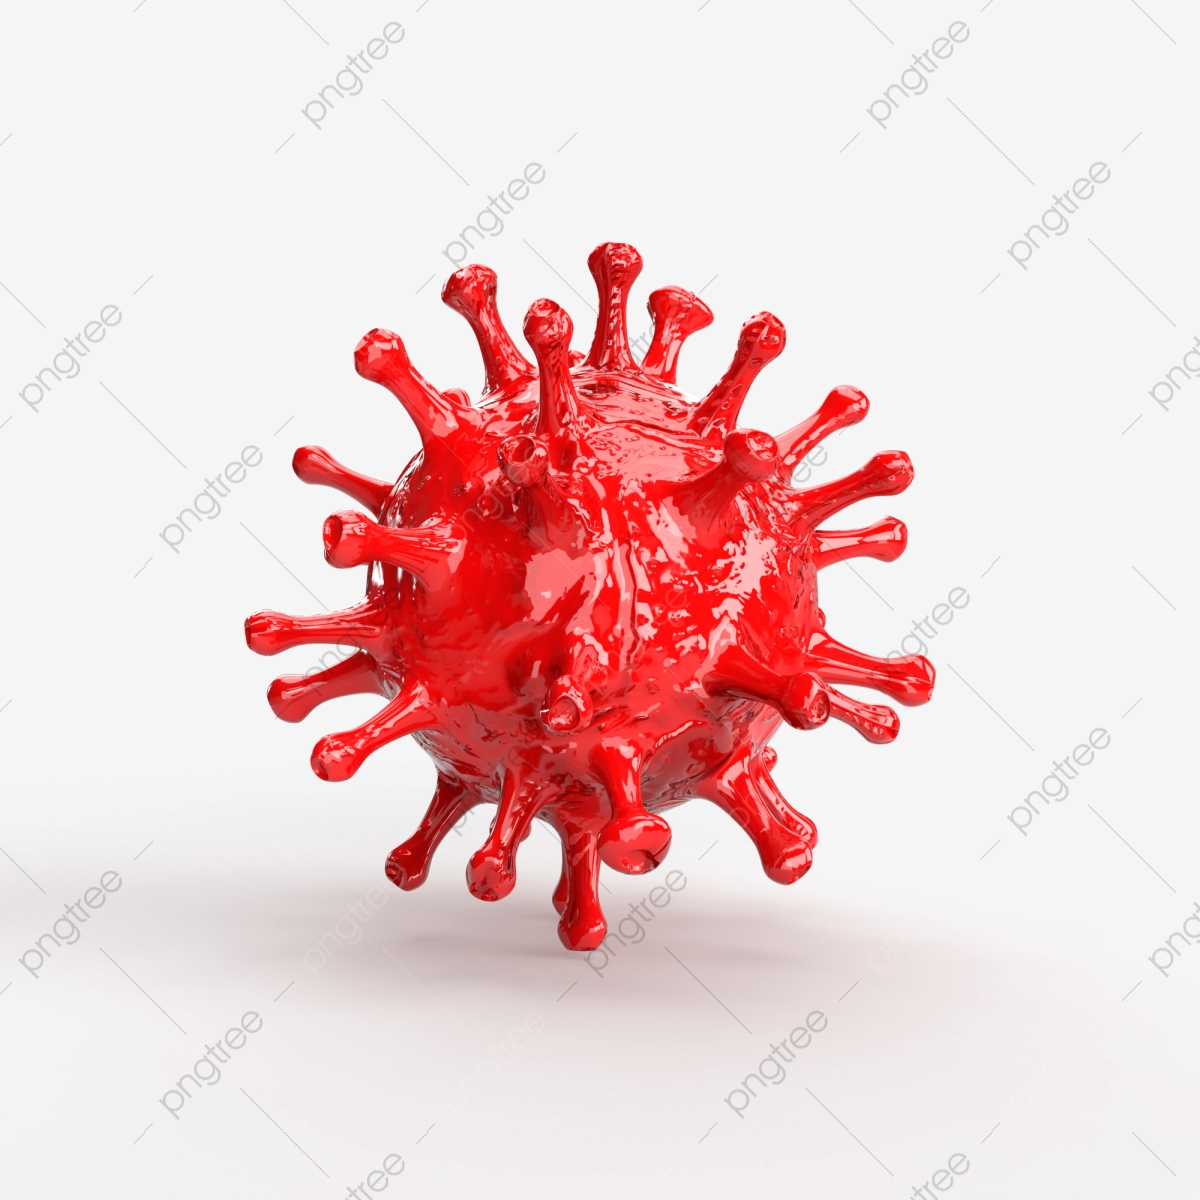 Coronavirus Or Flu Virus Microbiology And Virology Concep